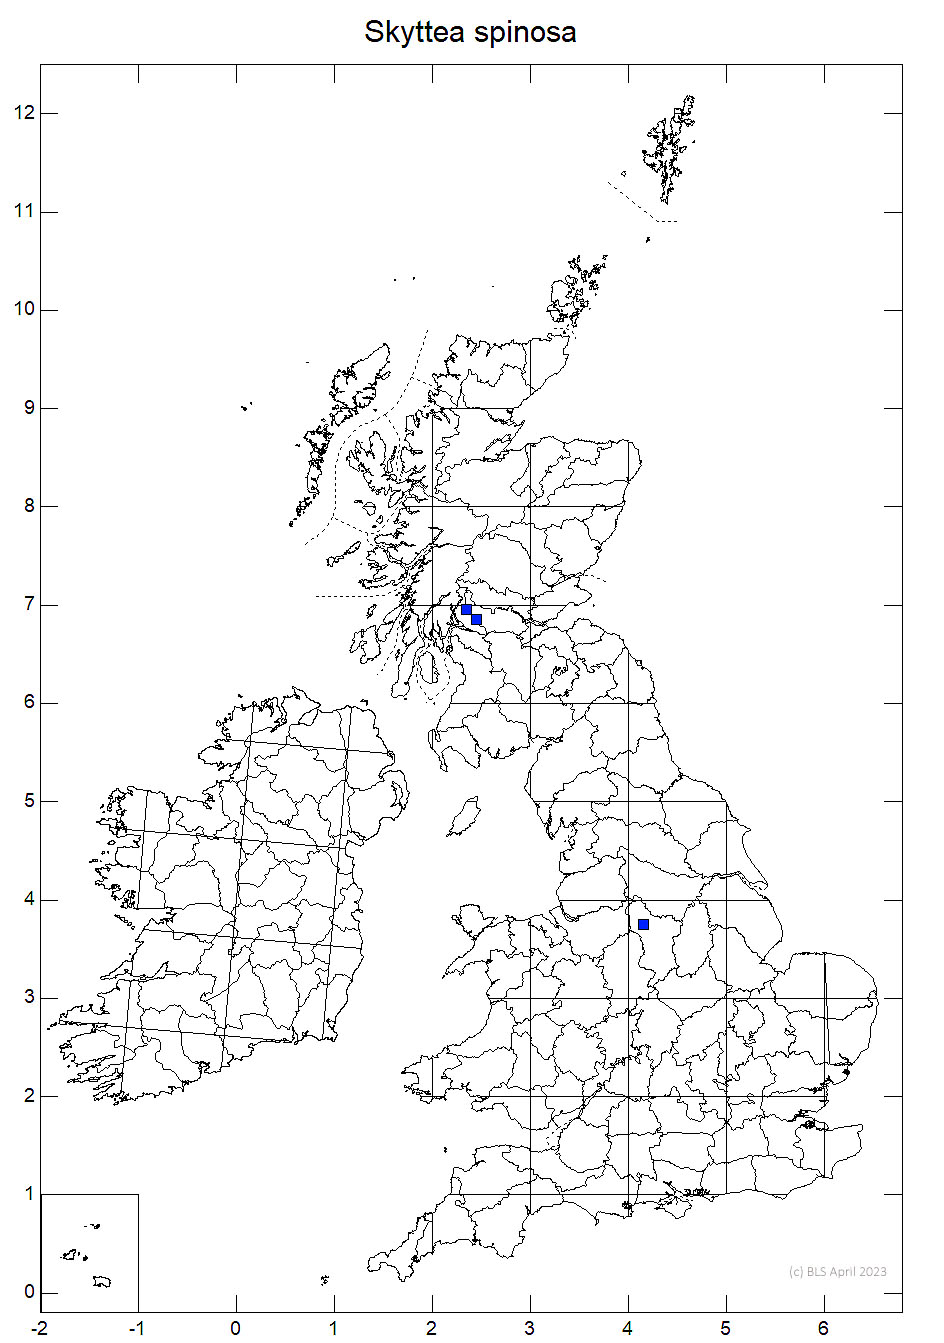 Skyttea spinosa 10km sq distribution map